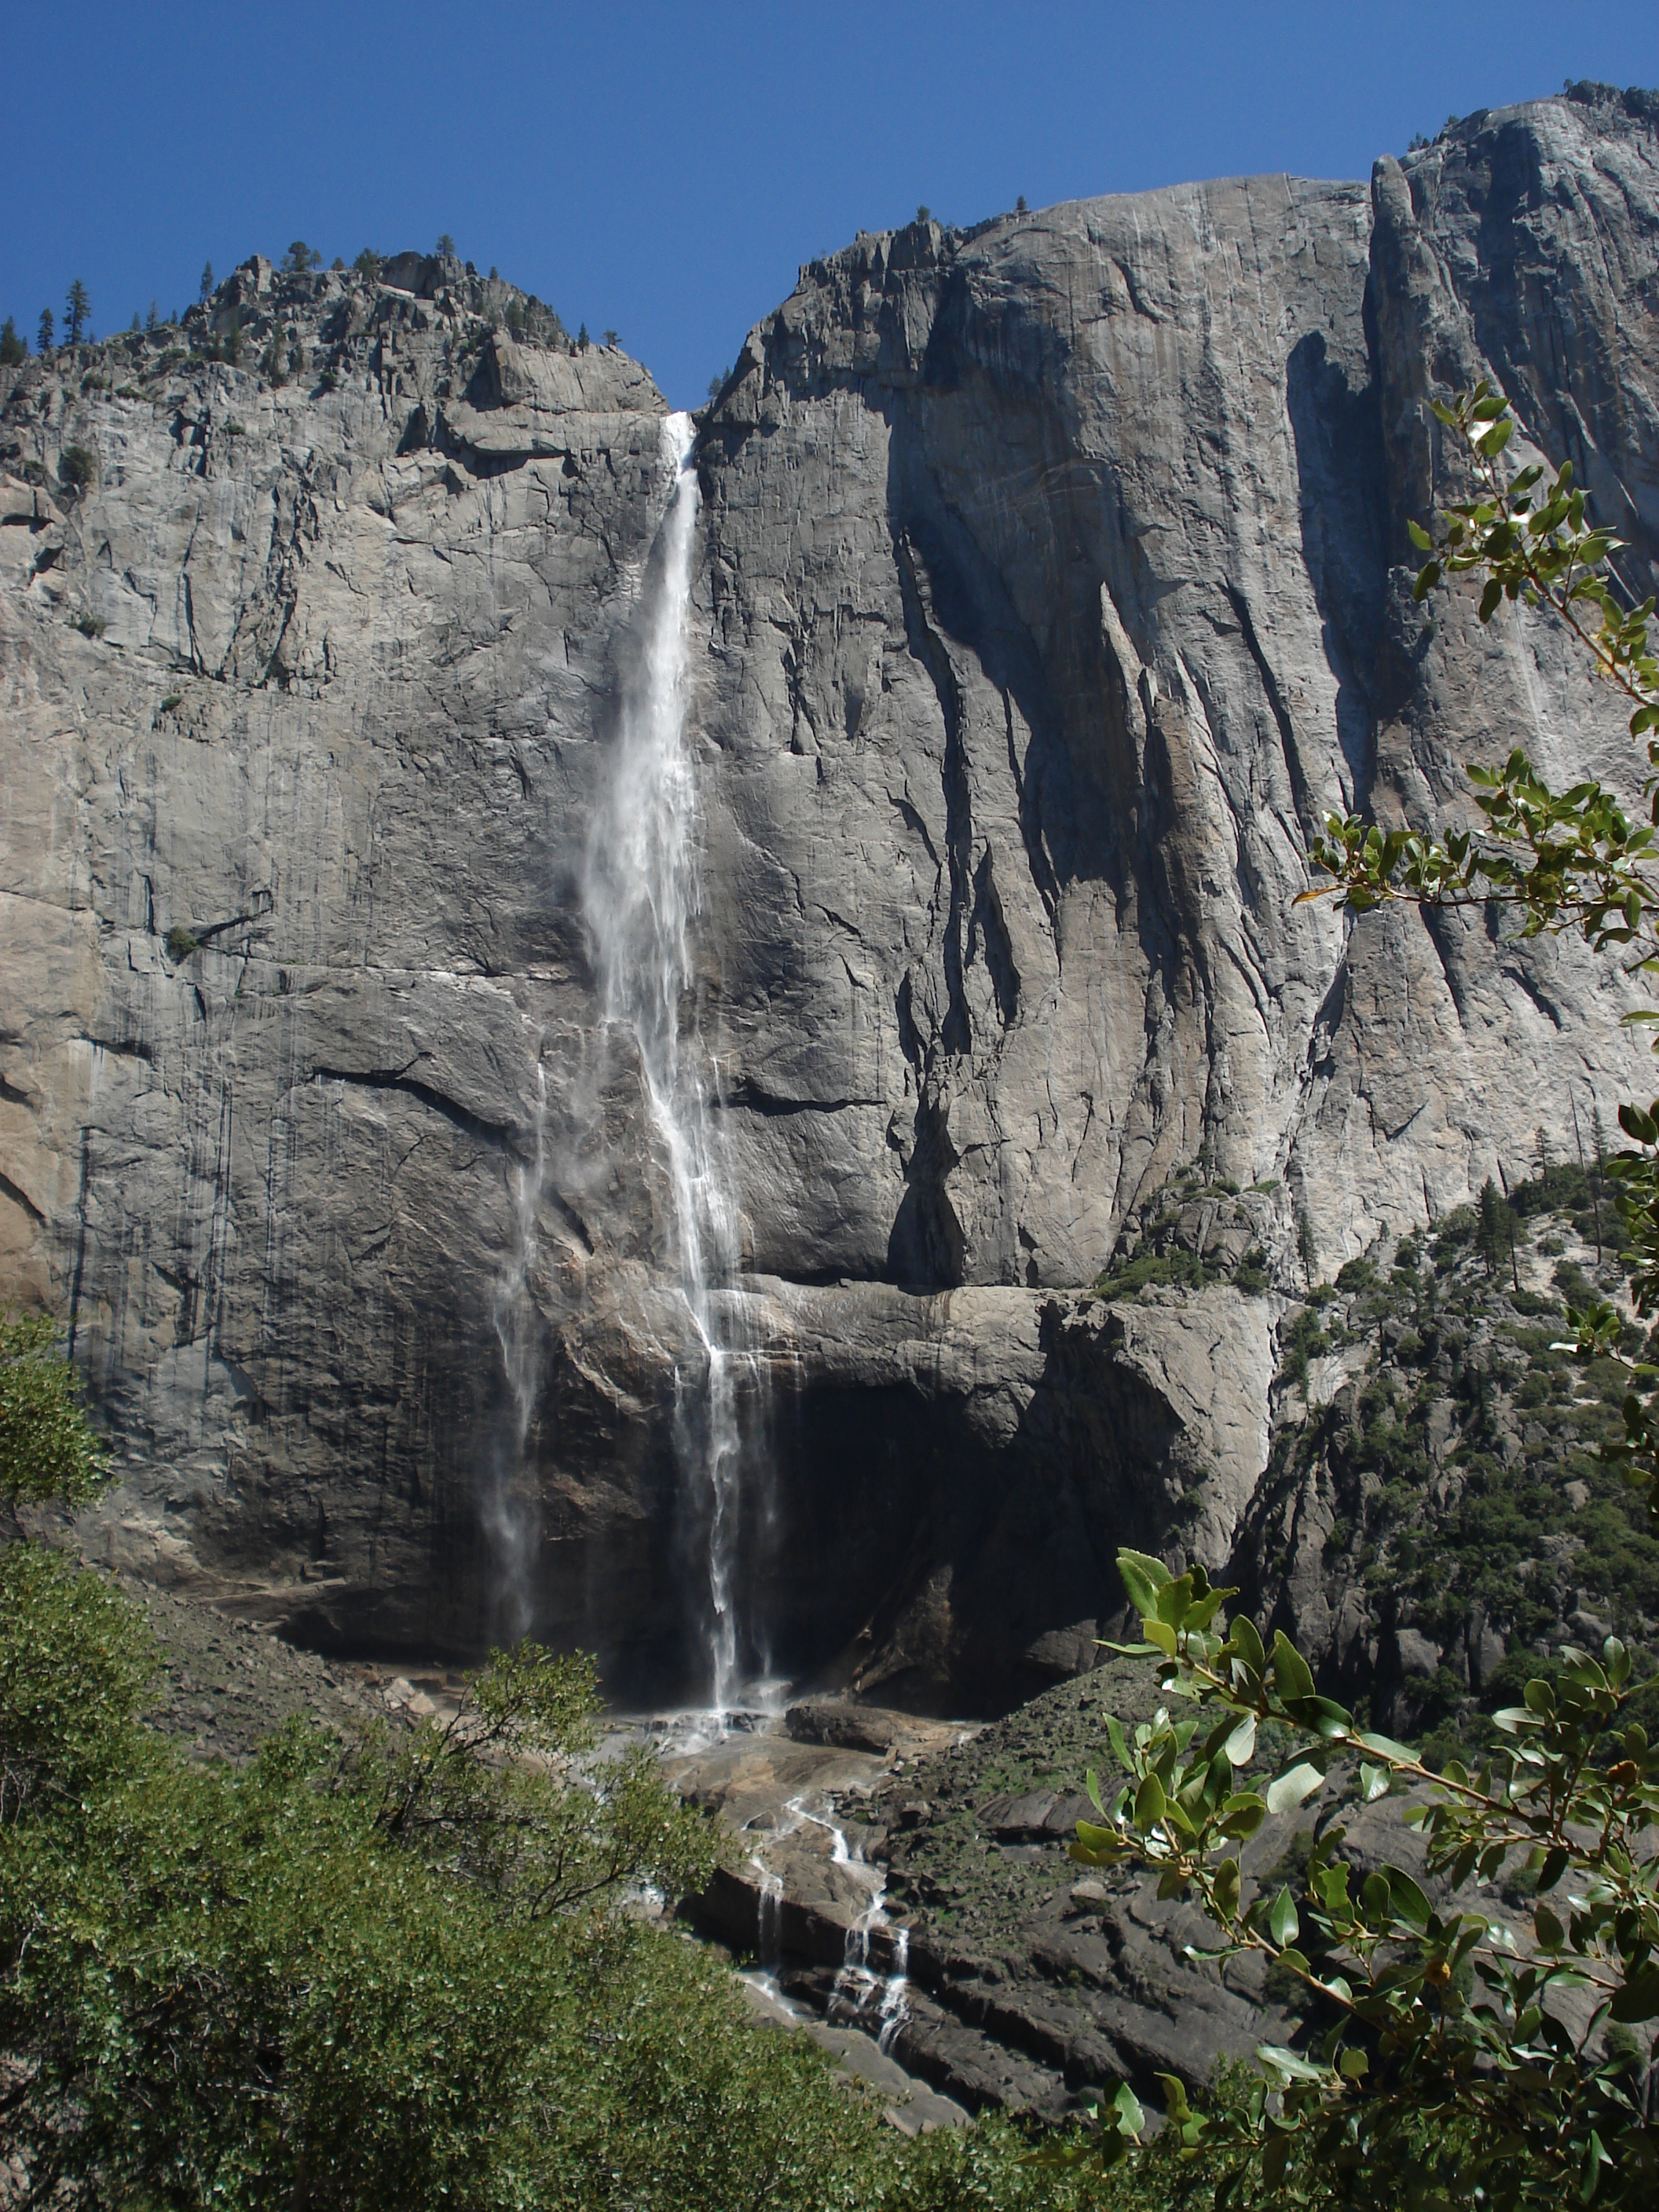 Download this Yosemite Falls picture